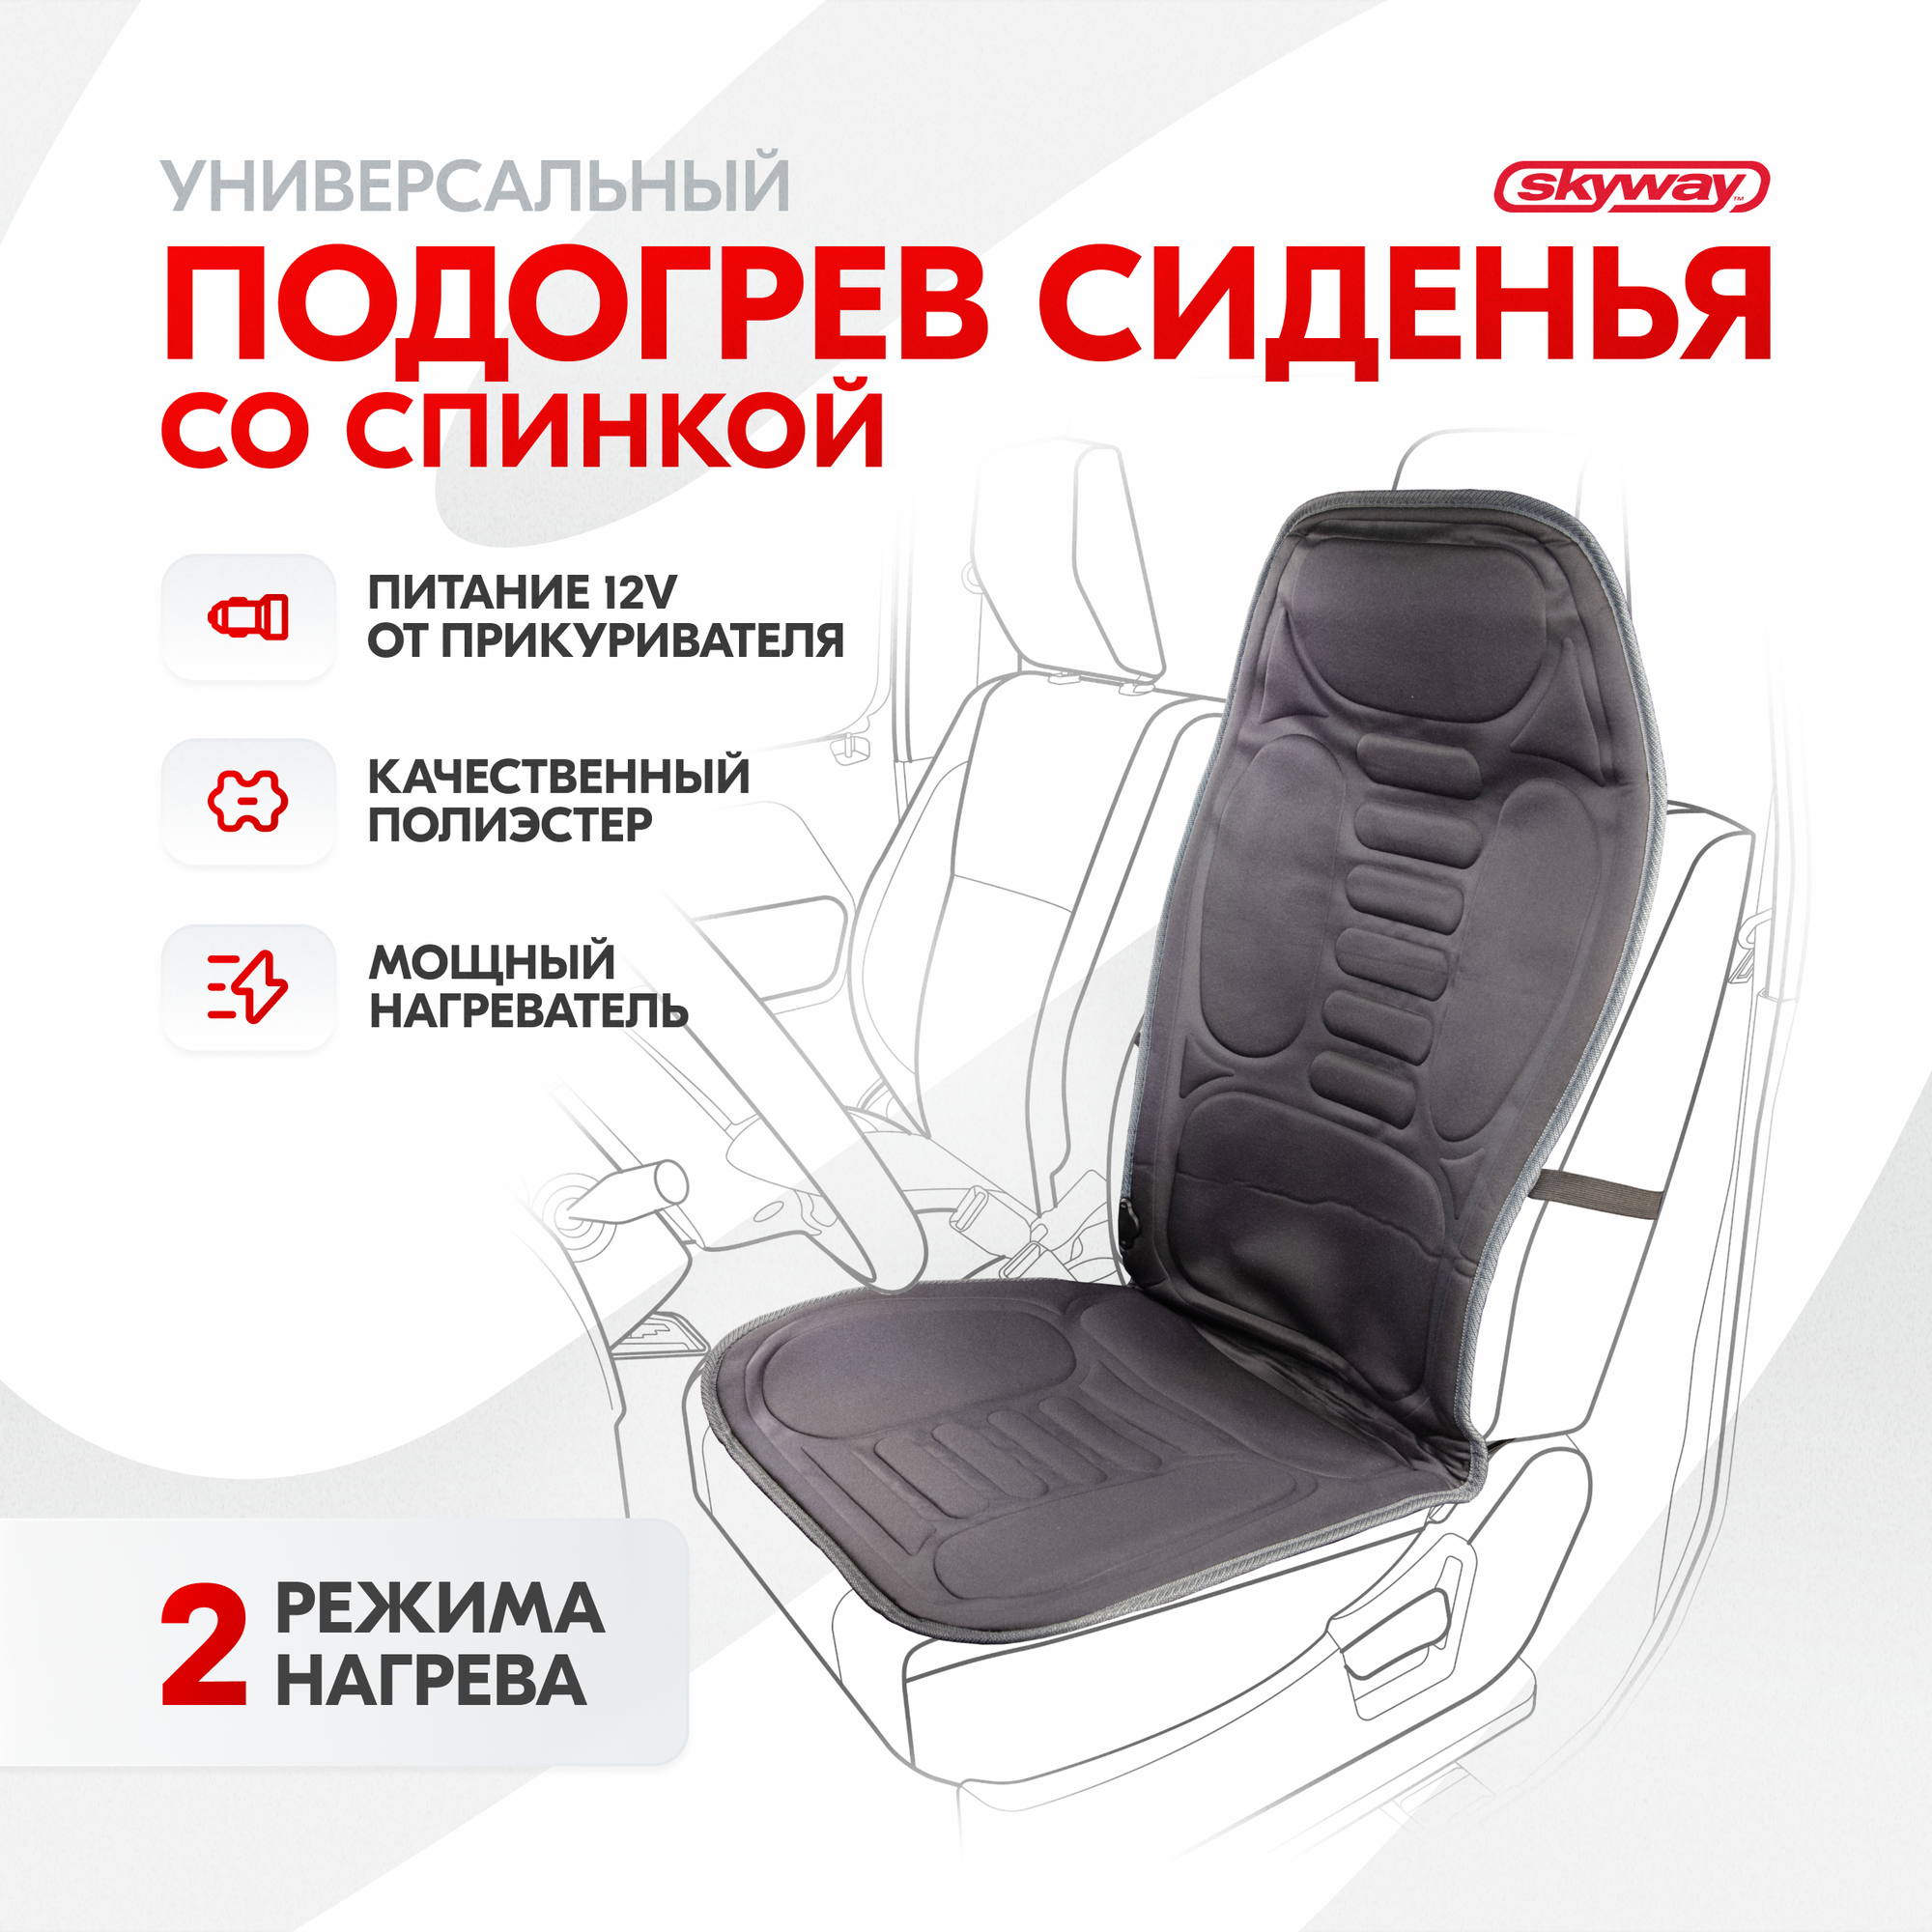 Накидка на сиденье с подогревом "SKYWAY" 1160 х 520 мм с терморегулятором (2 режима) Серый 12V 2,5А Skyway S02201005